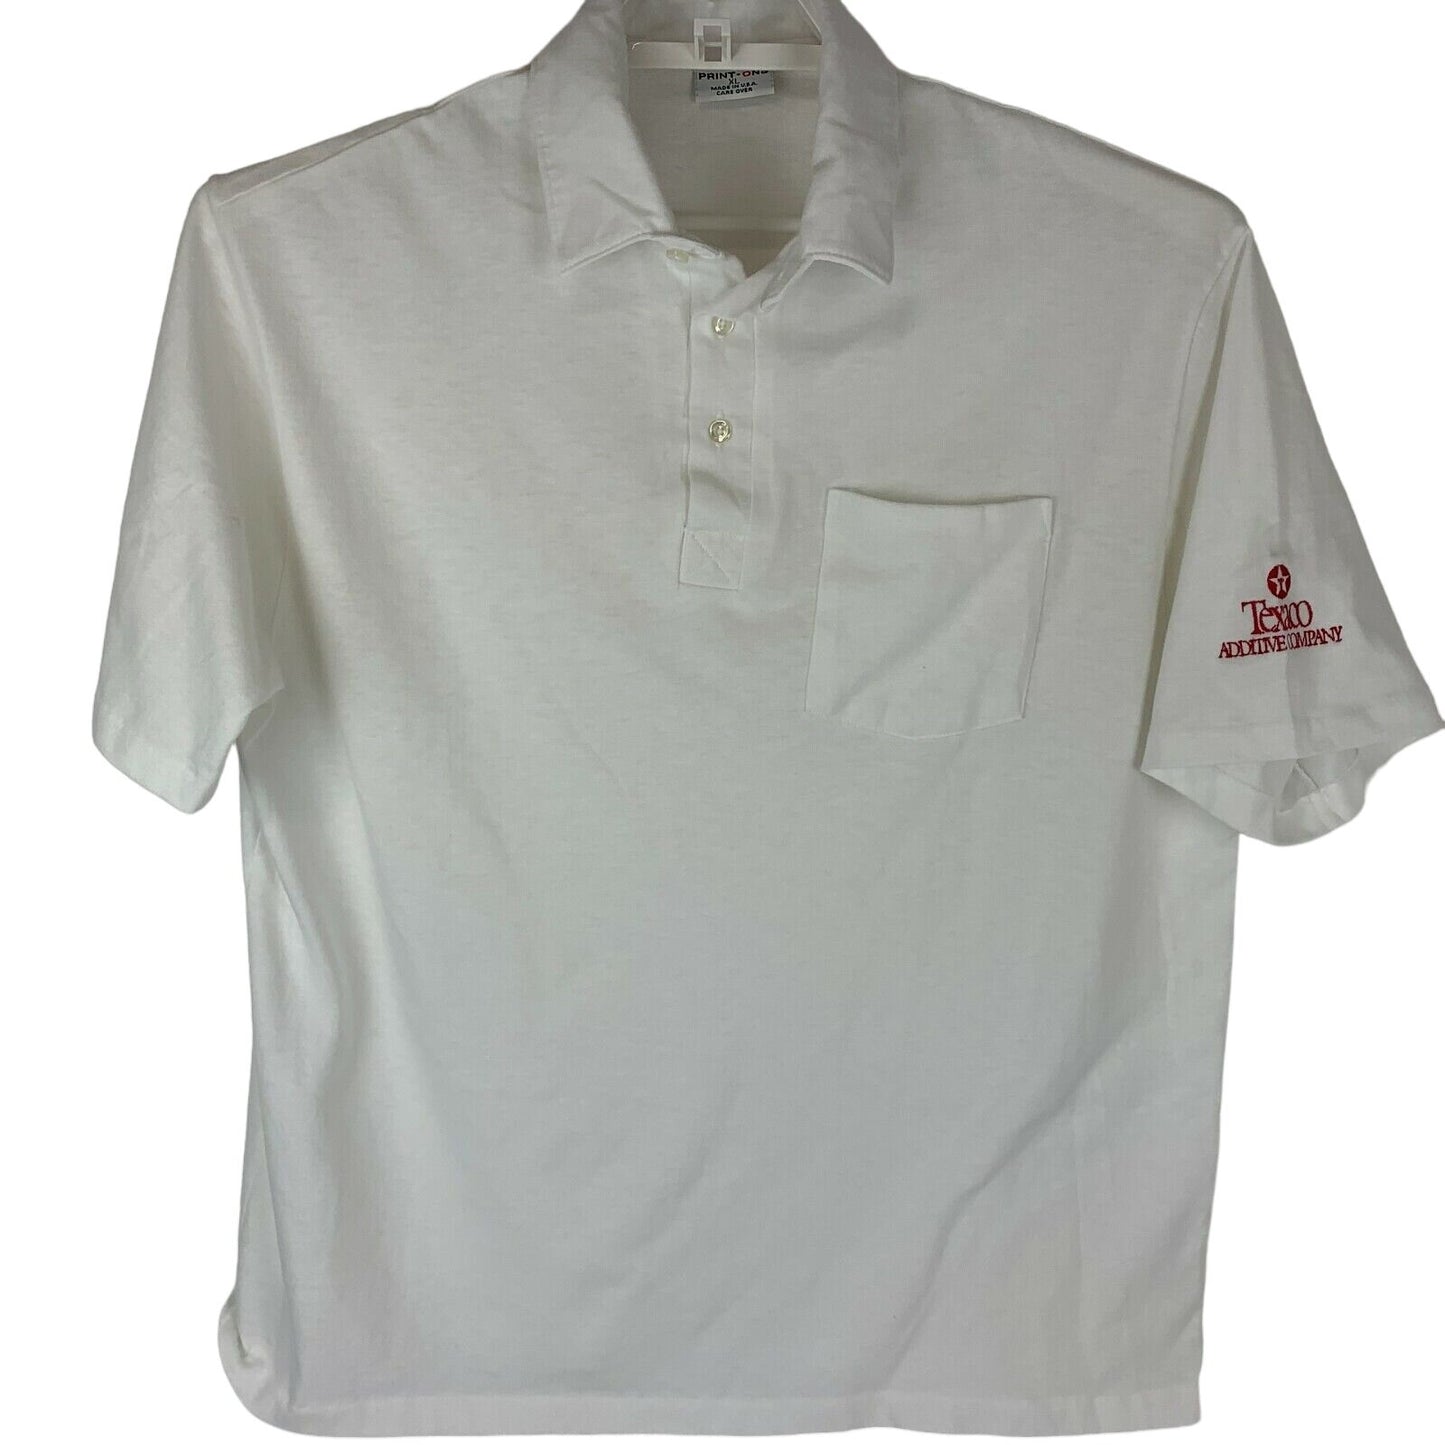 Texaco Vintage 90s Polo Camiseta Additive Company Gas Oil Hecho en EE.UU. Camiseta XL